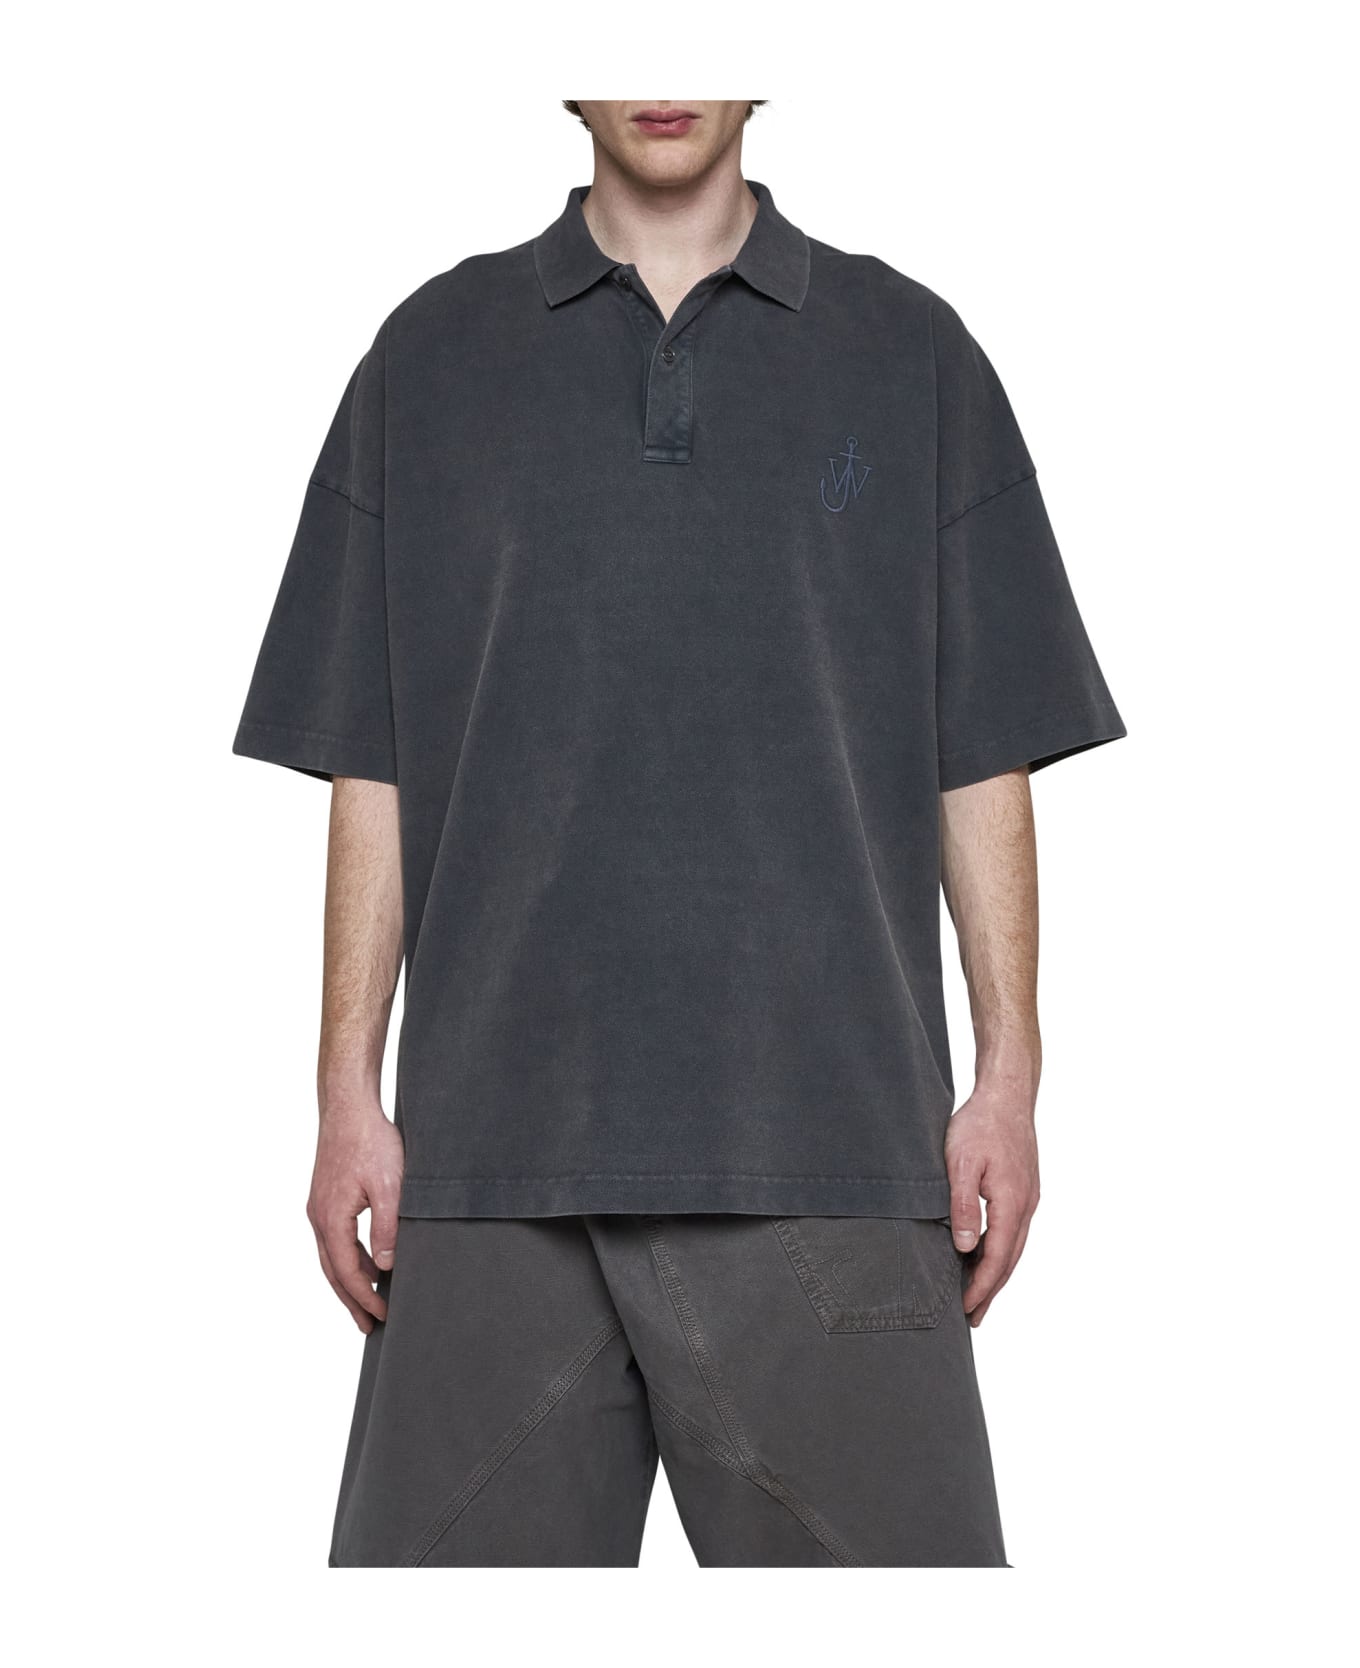 J.W. Anderson Polo Shirt - Charcoal